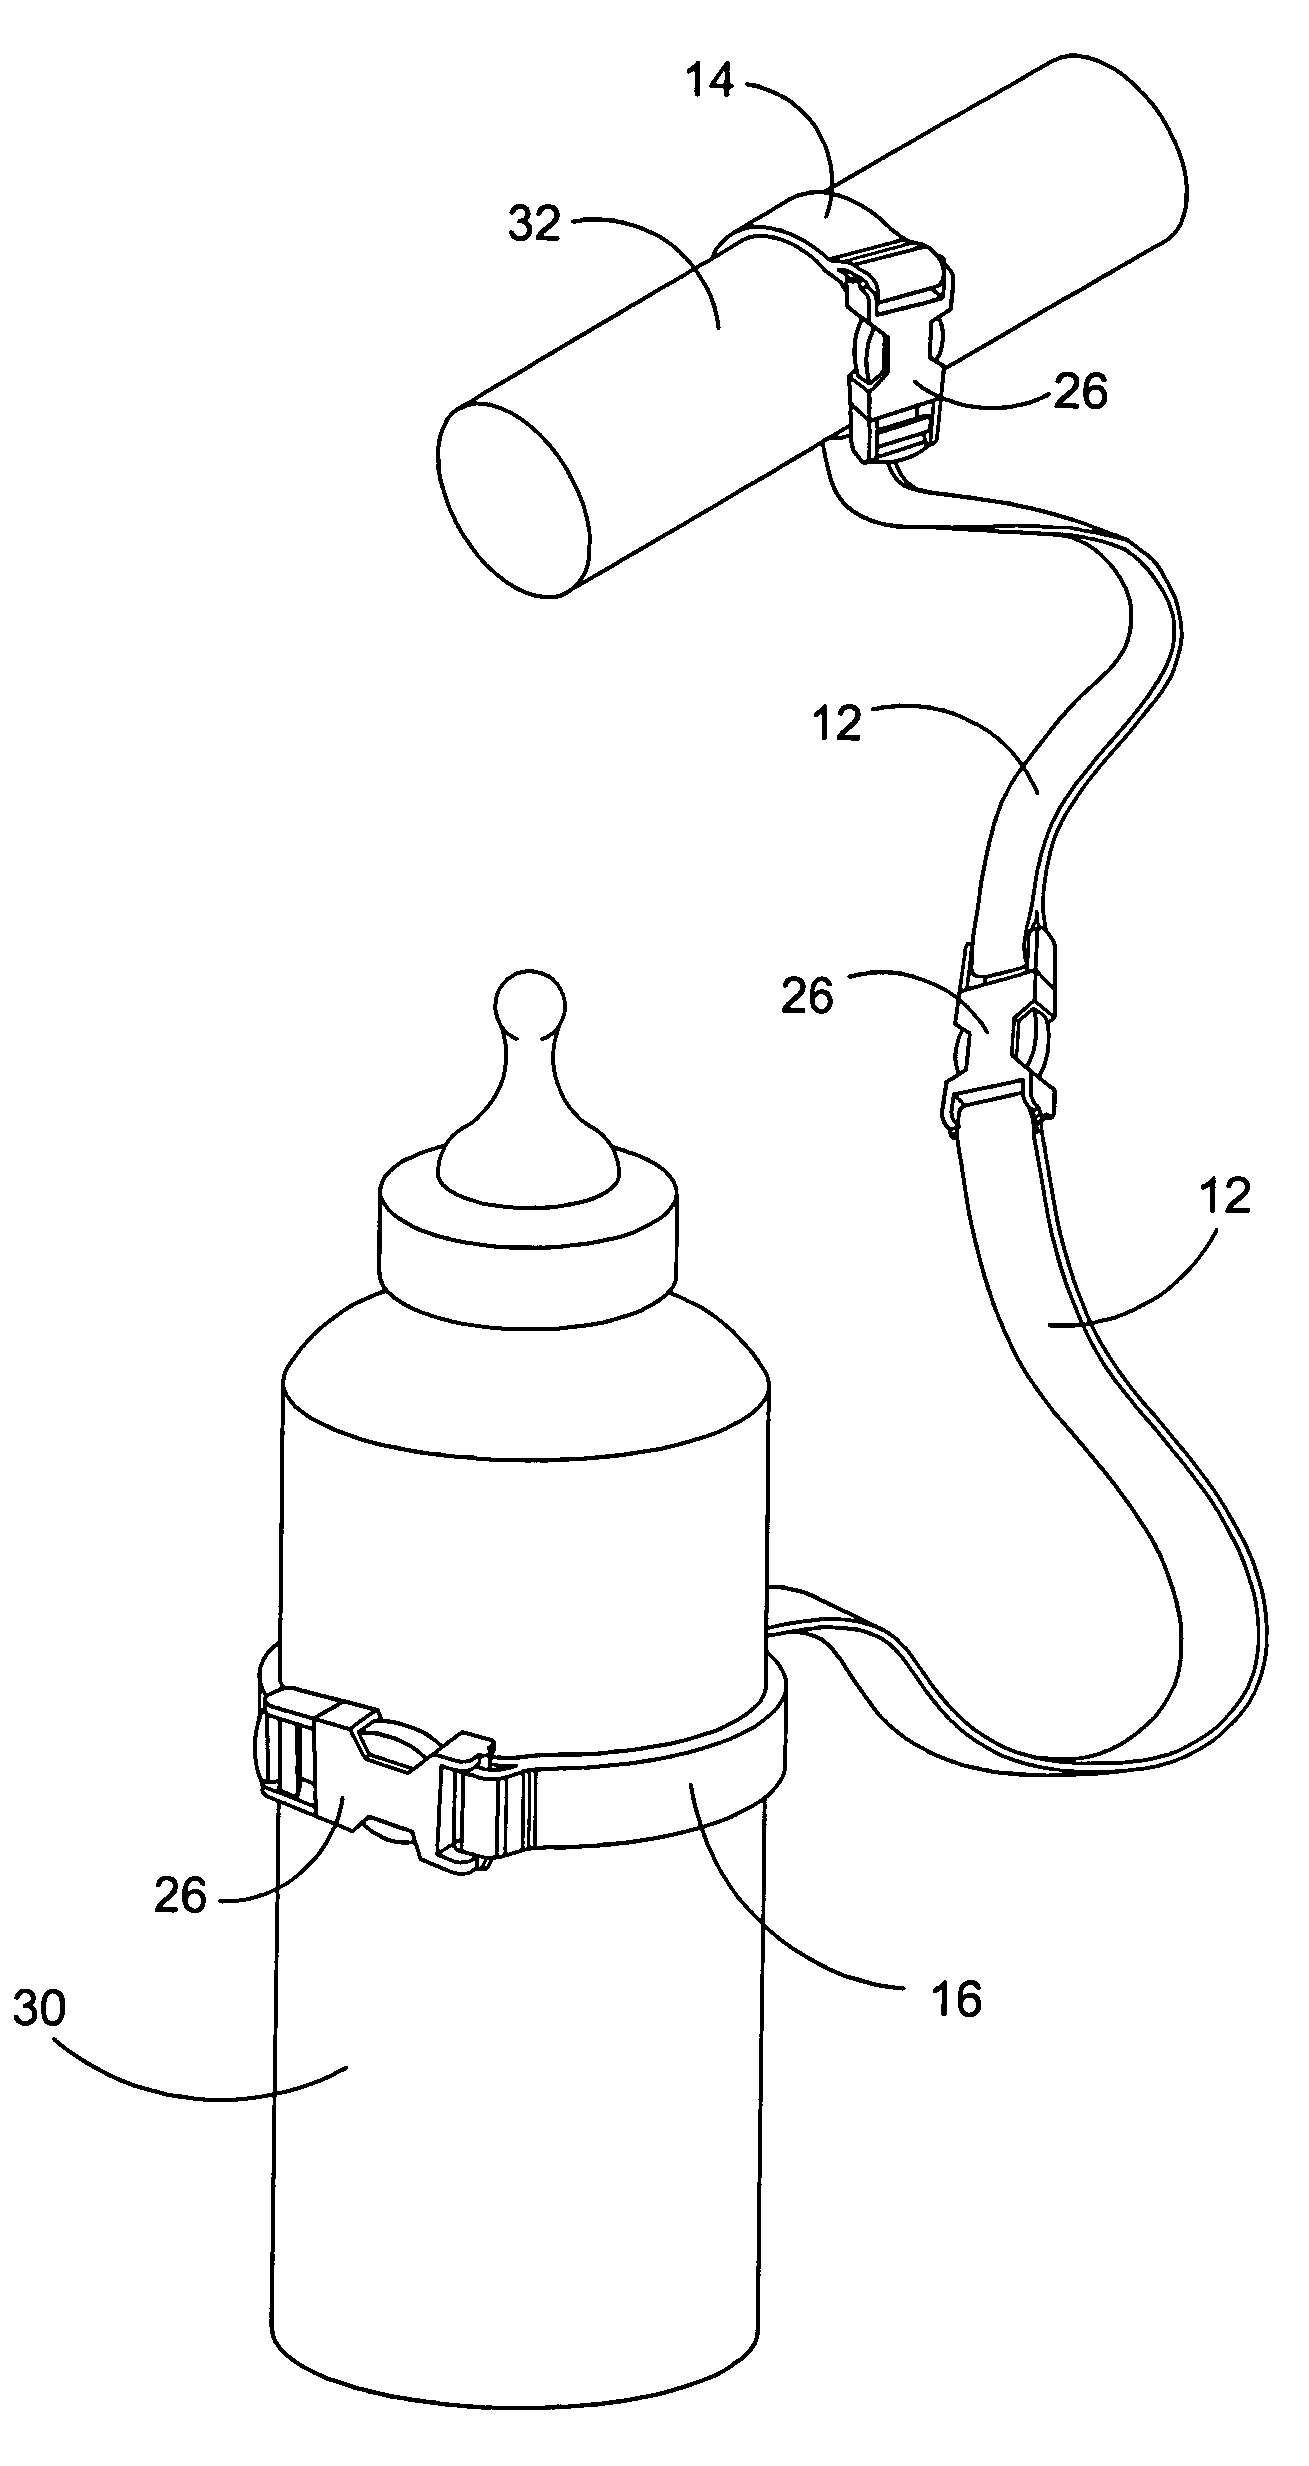 Bottle tethering device